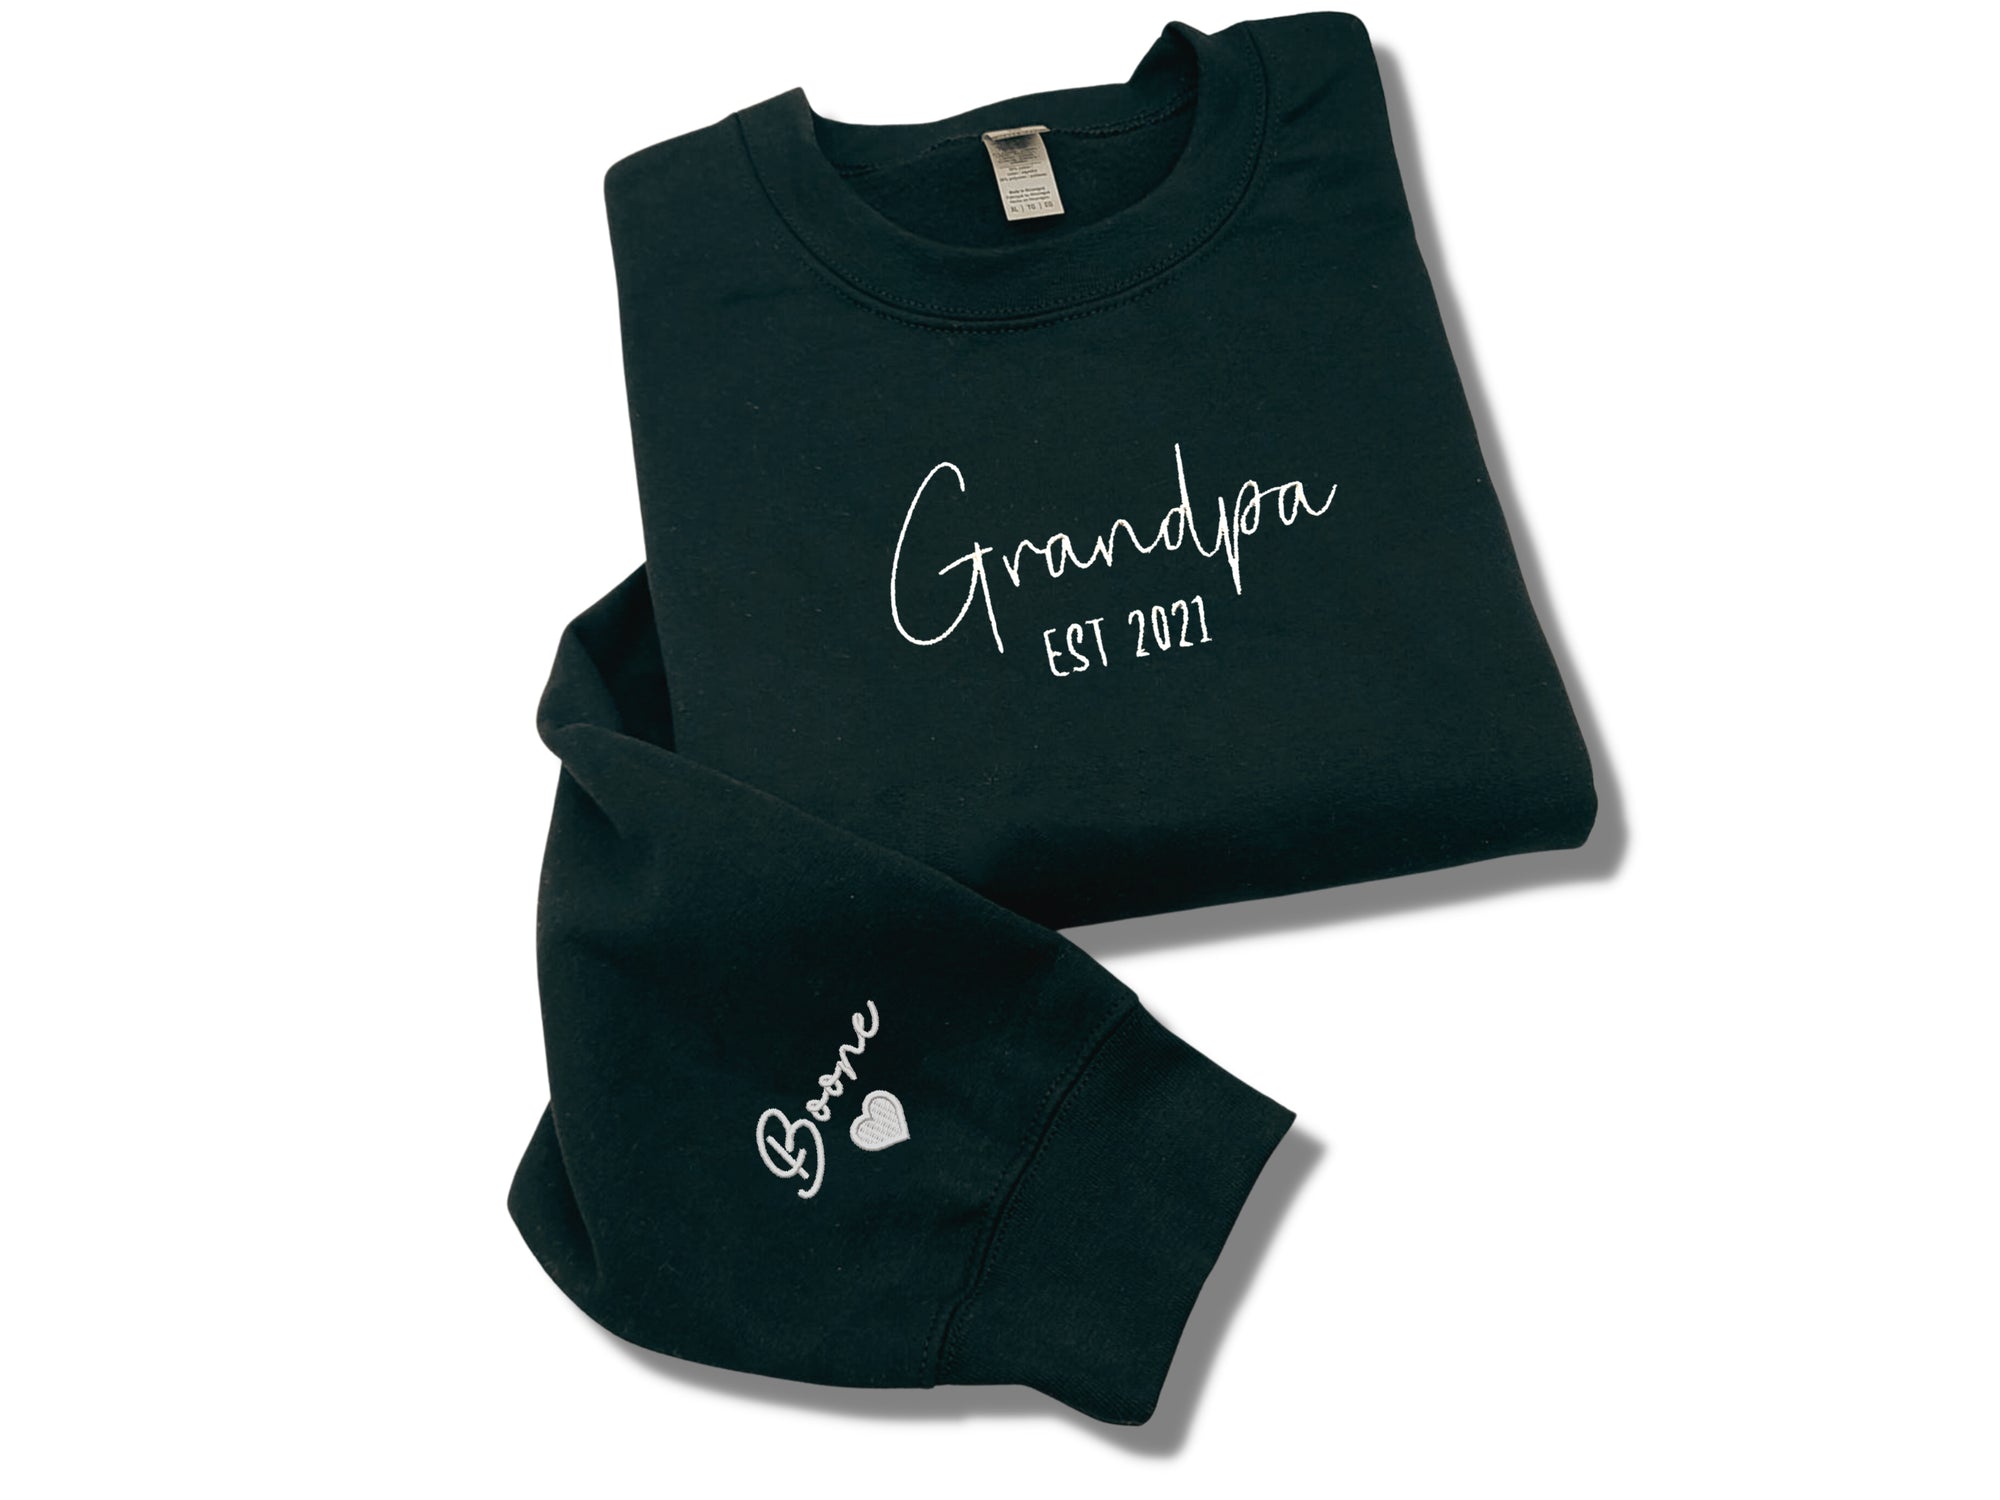 Grandpa Sweatshirt, Custom Grandpa EST Crewneck Embroidered with Kid Name, Grandpa Hoodie